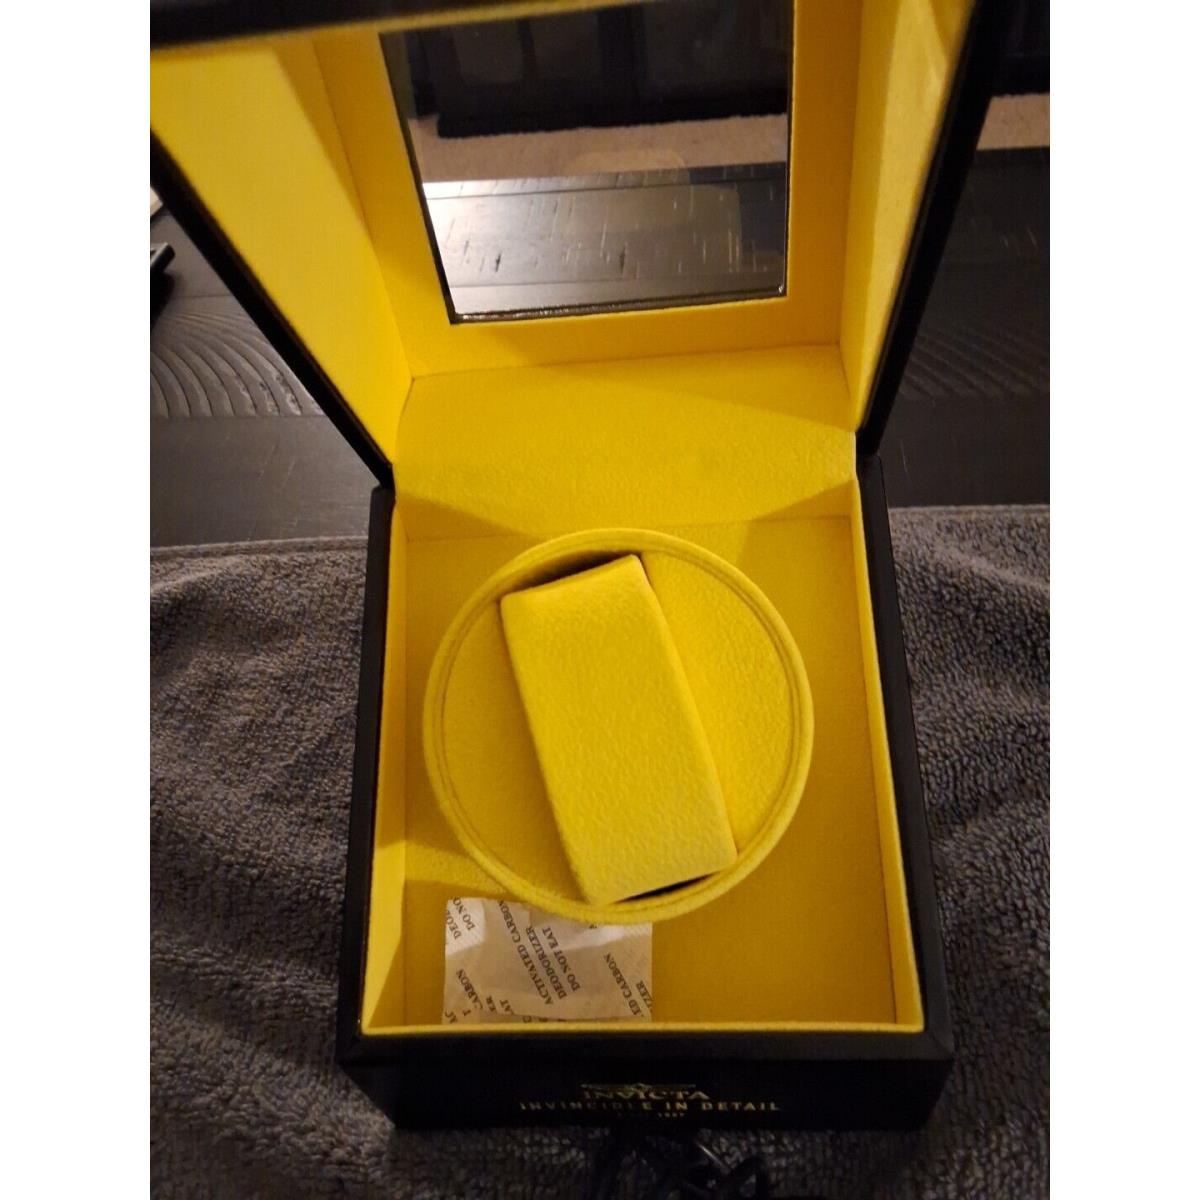 Invicta IPM546 Automatic Watch Winder 1 Slot Black Yellow Display Case